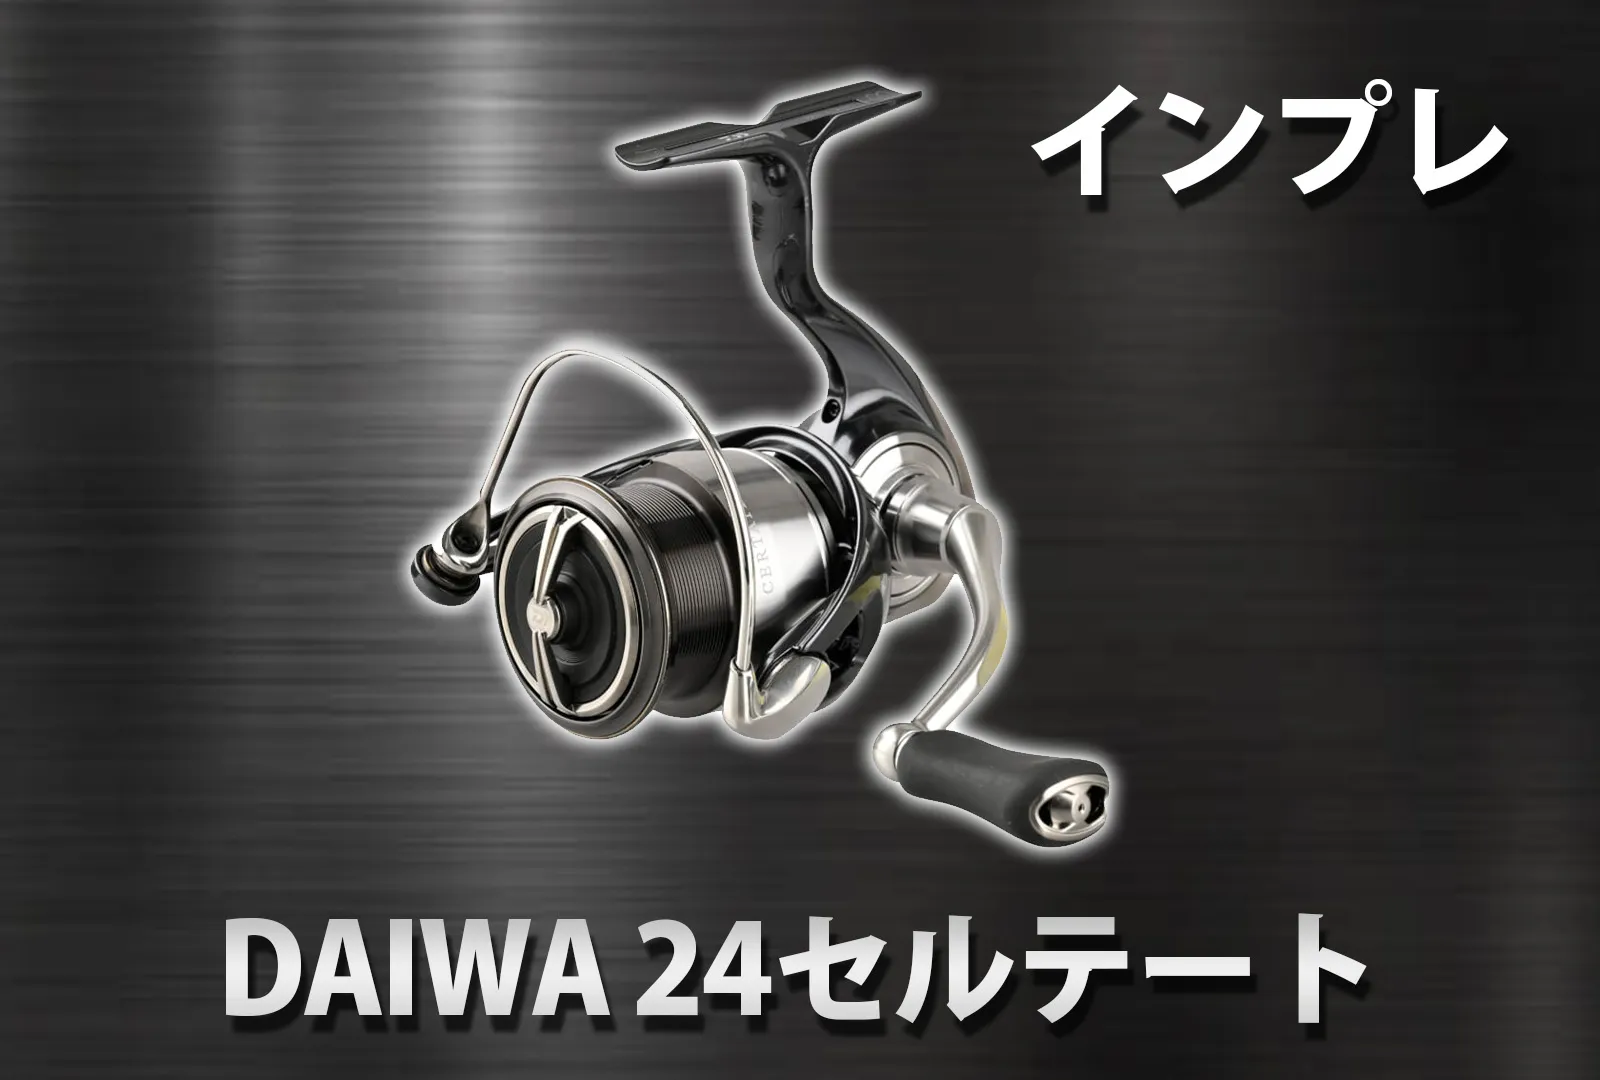 [Review] Daiwa 24 Certate: Enhanced Rigidity & Evolution for a Popular Reel!